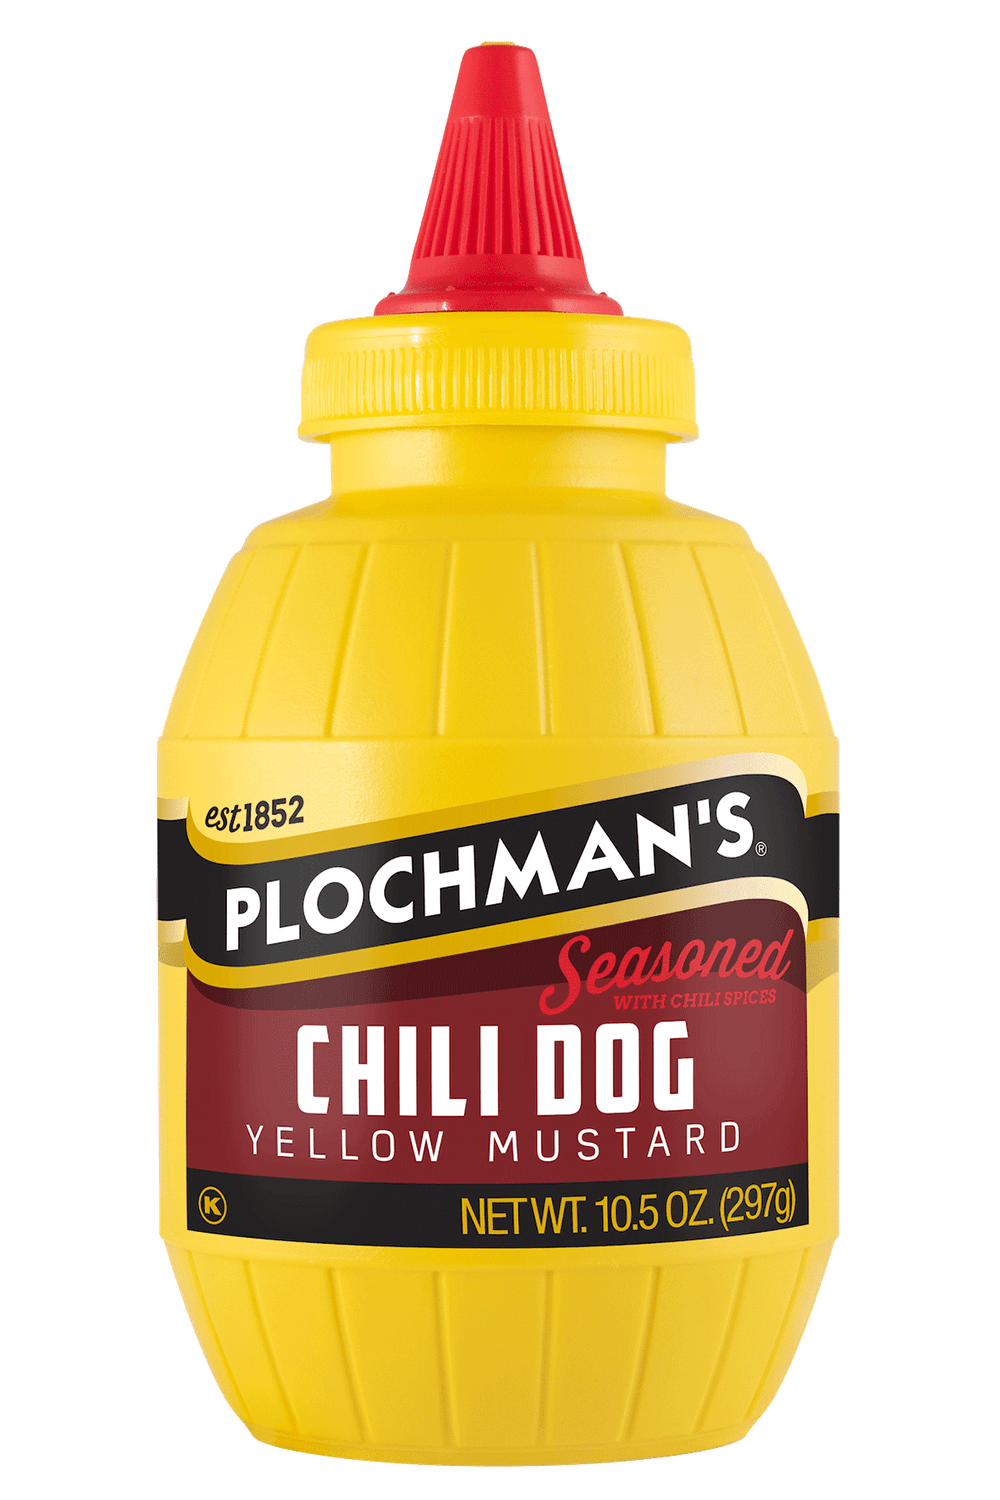 Plochman's Chili Dog Mustard 10.5oz barrel bottle